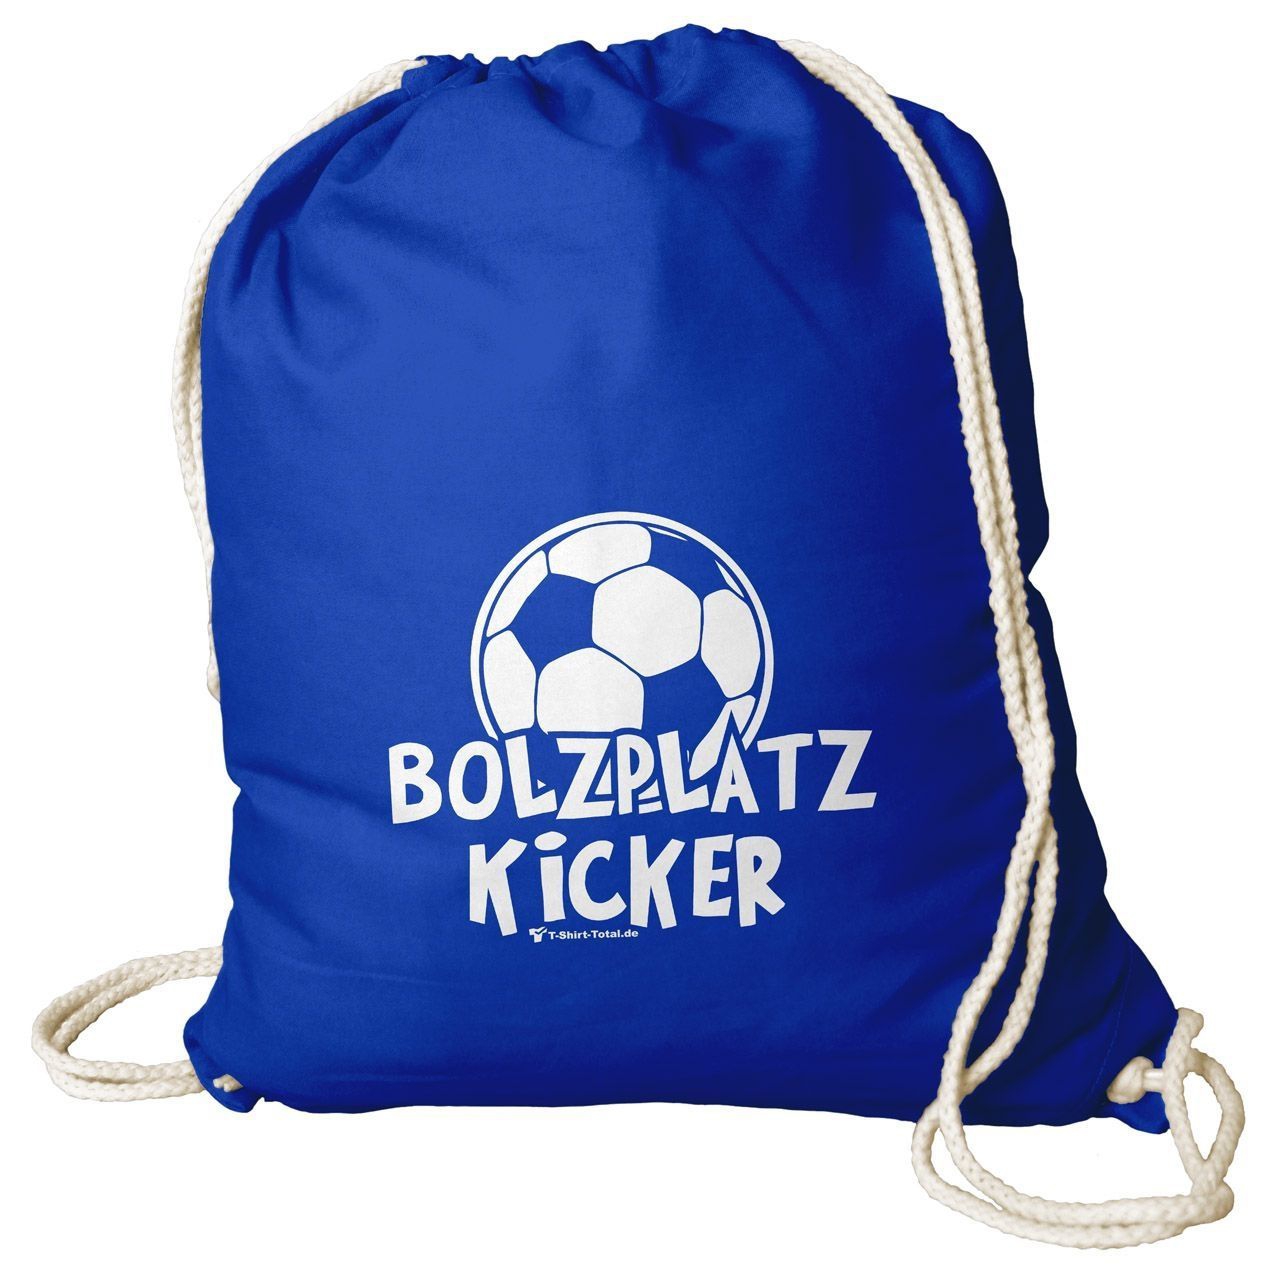 Bolzplatz Kicker Rucksack Beutel royal